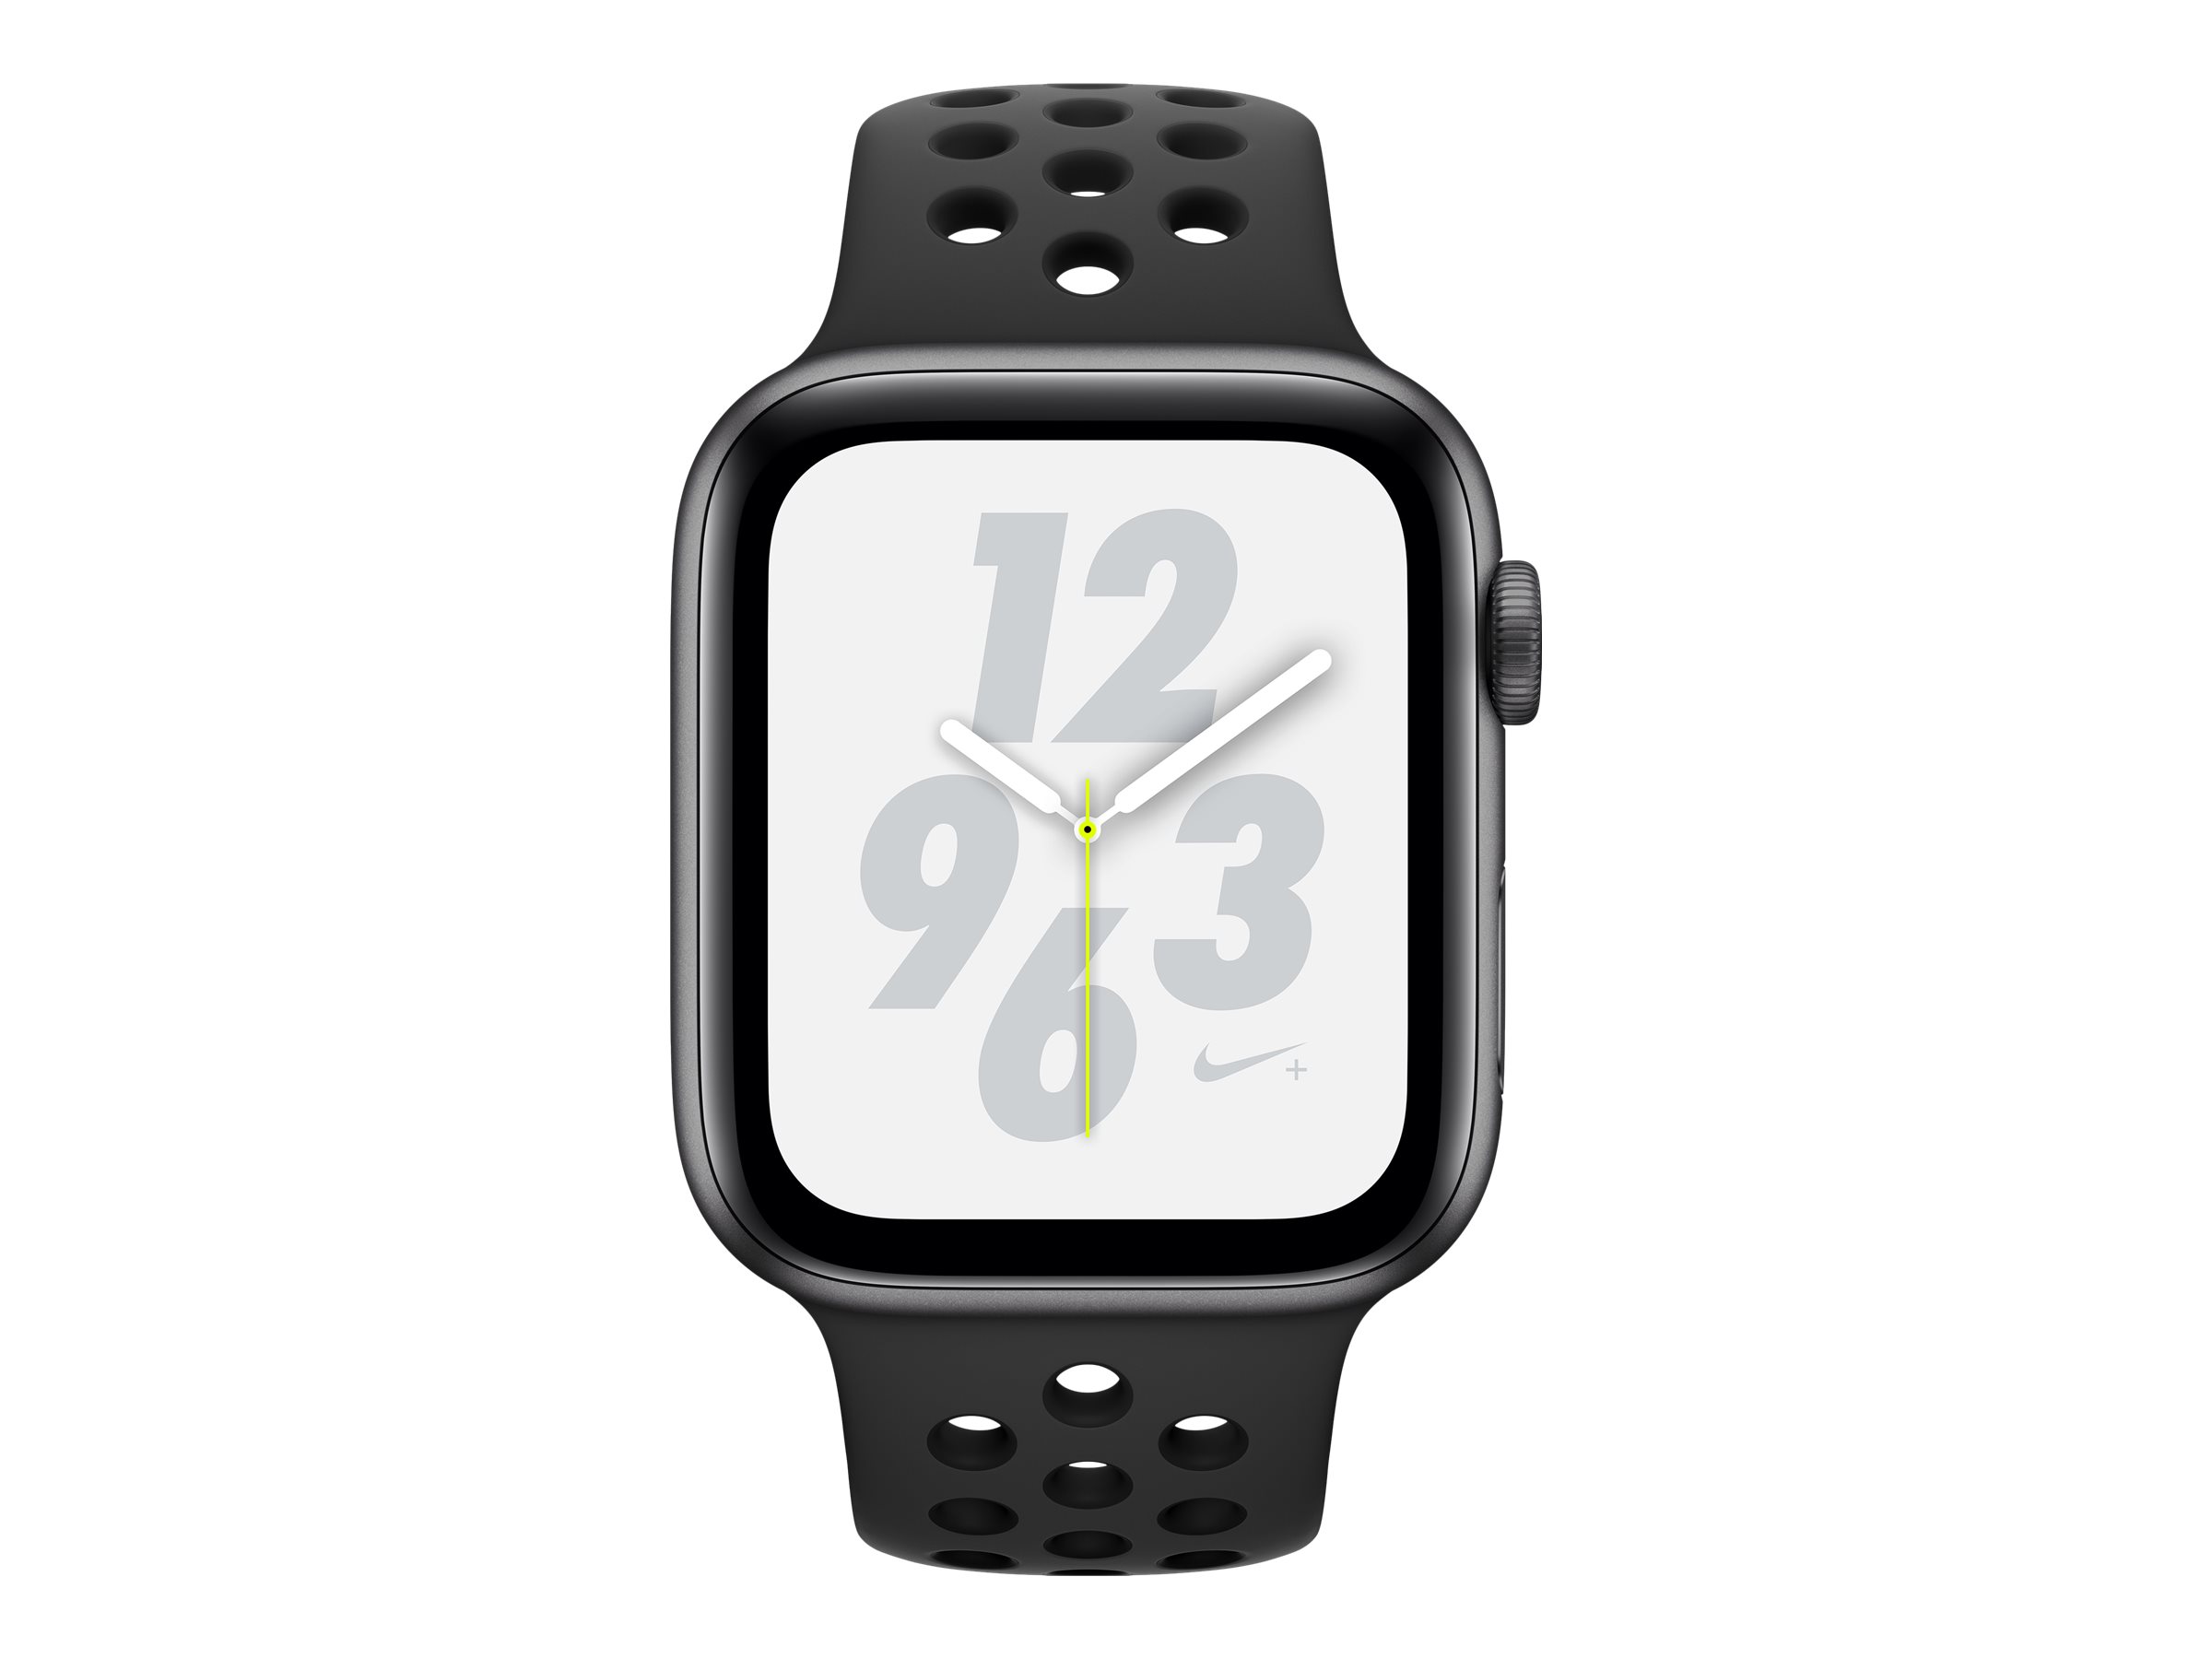 Apple Watch Nike+ Series 4 (GPS + Cellular) - full specs, details